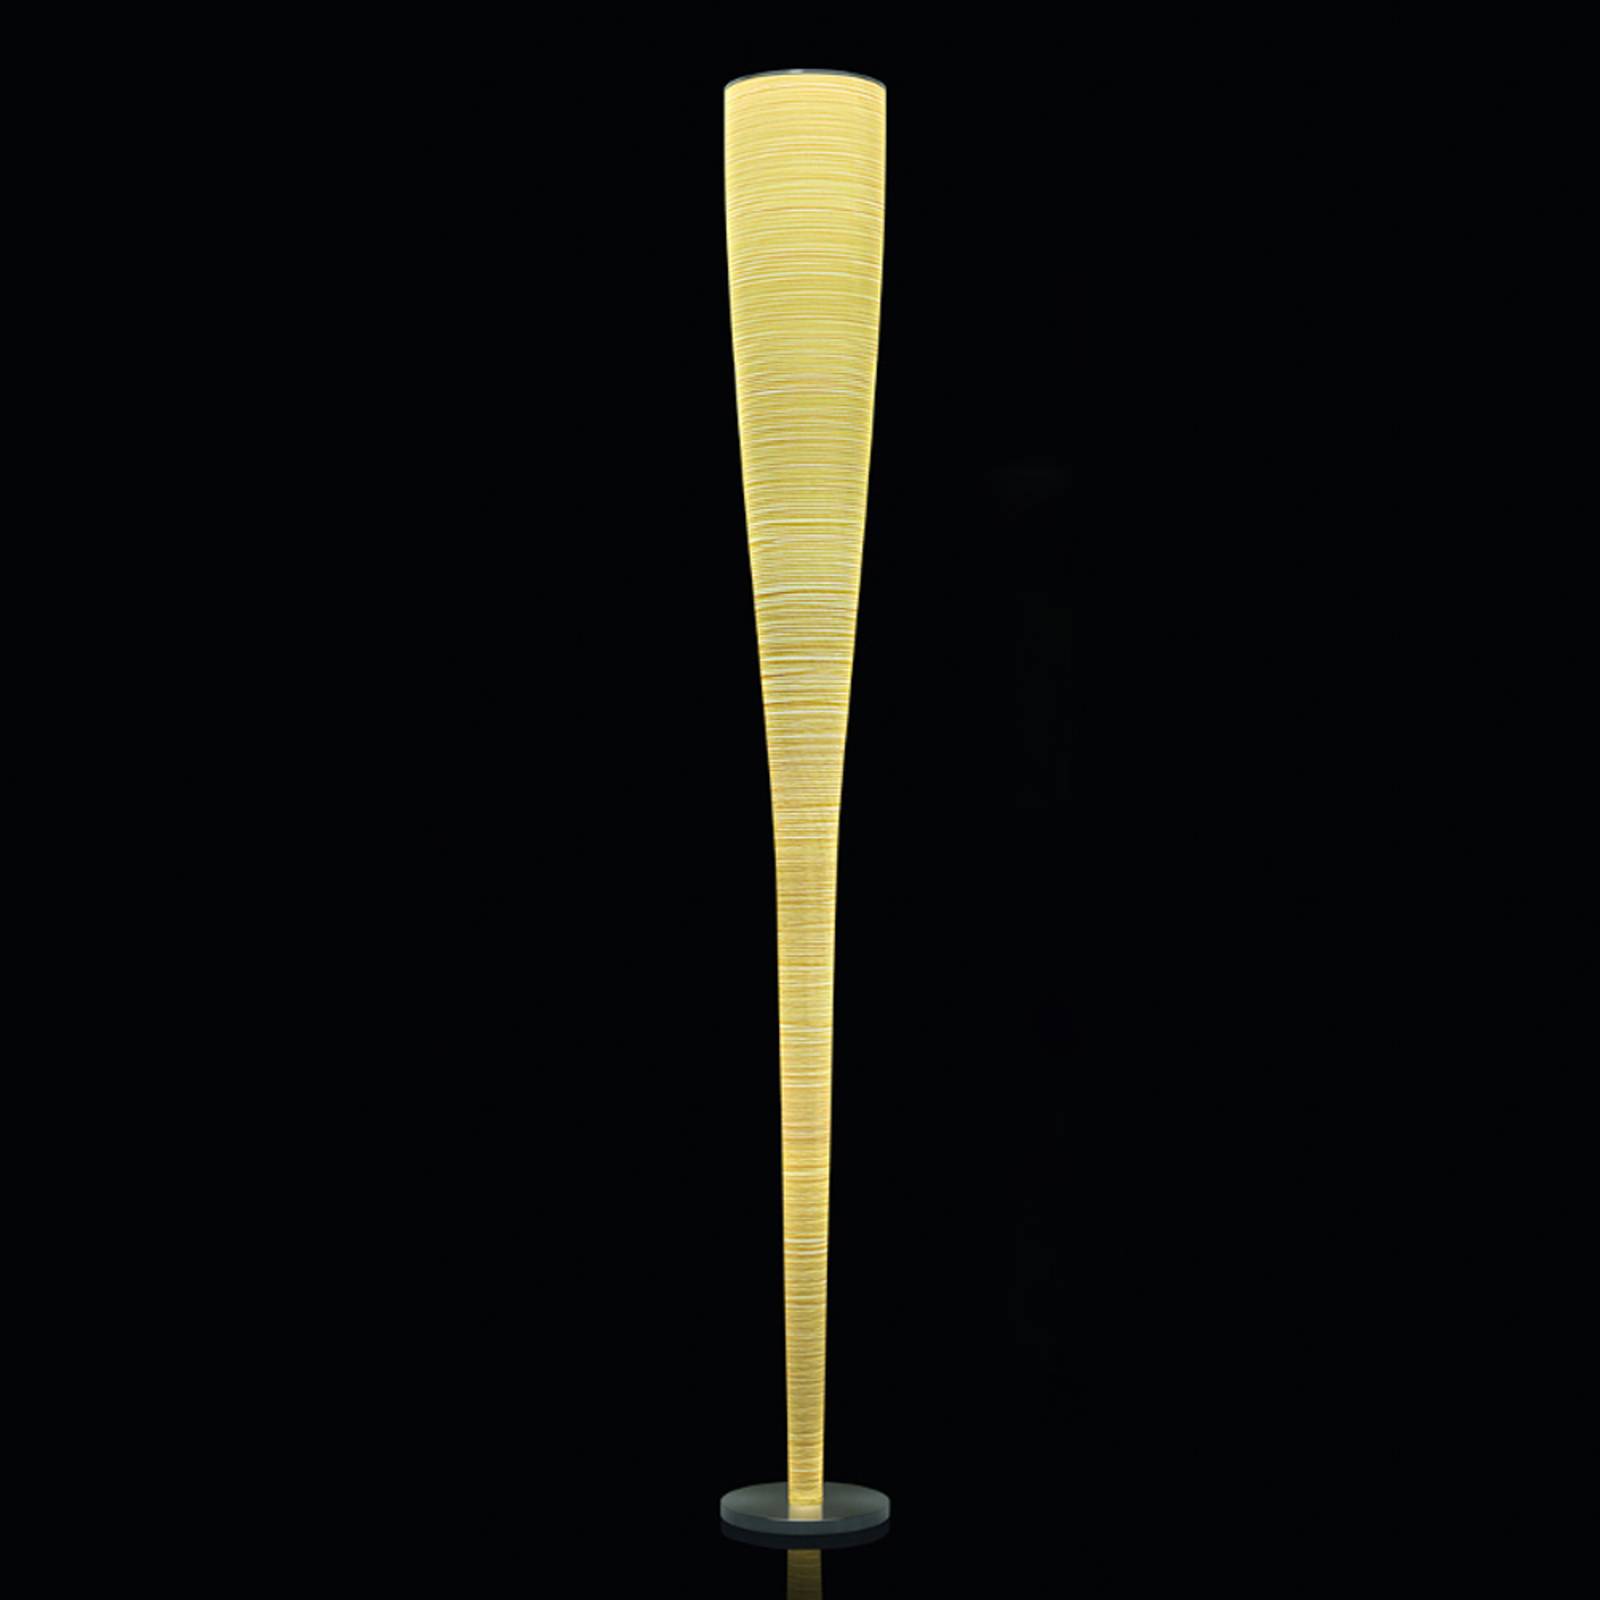 Foscarini Foscarini Mite LED stojací lampa, žlutá